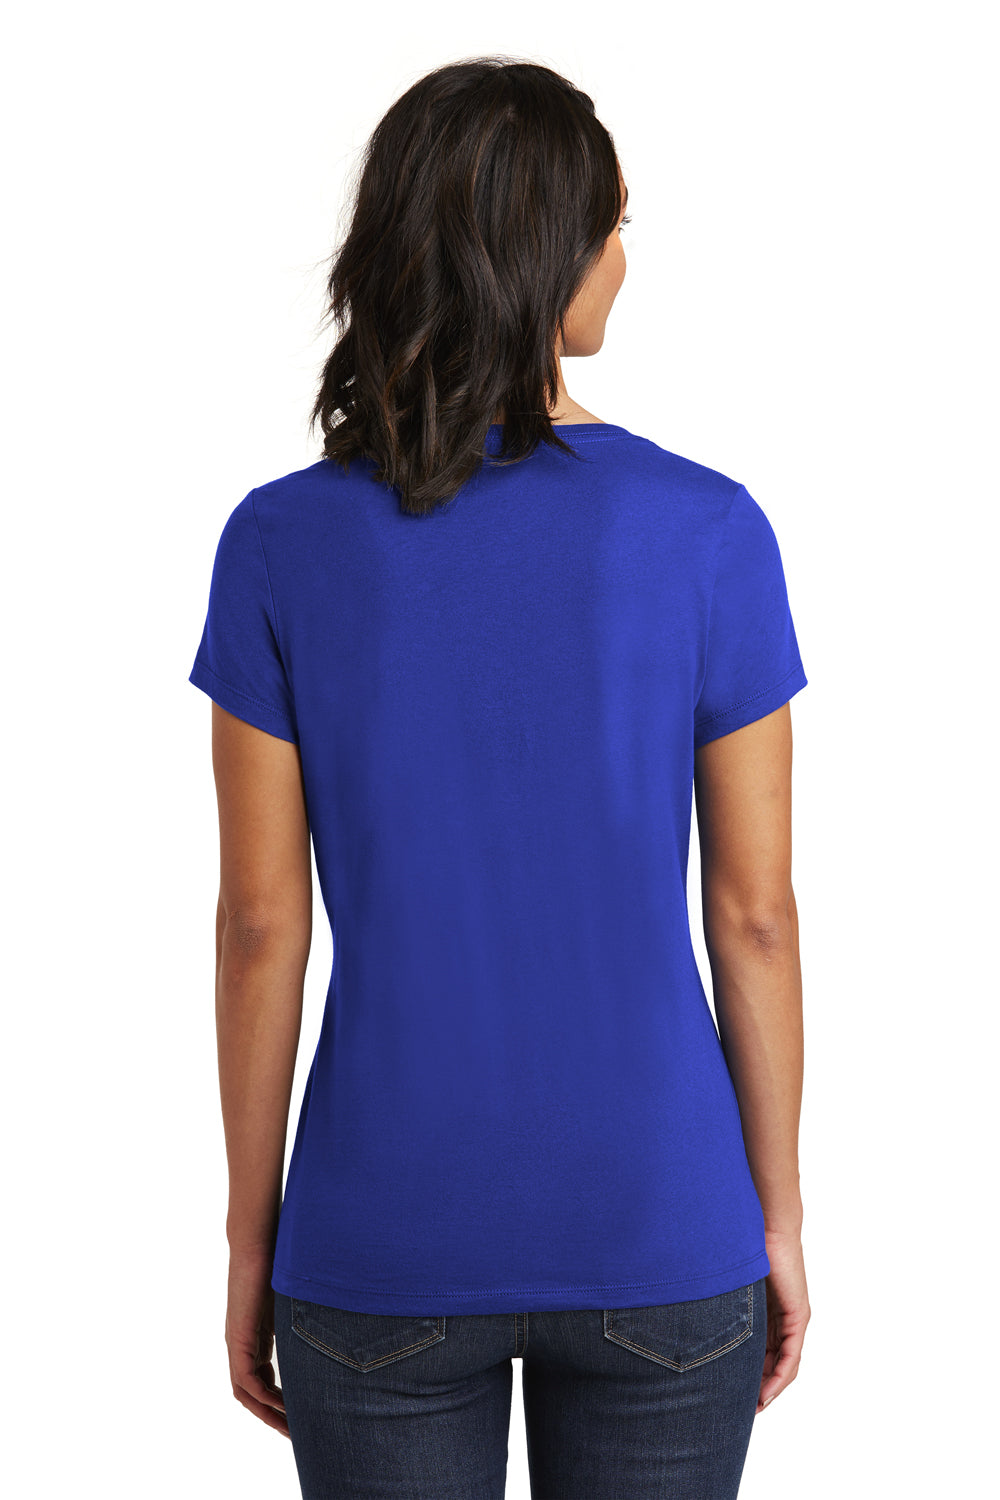 District DT6503 Womens Very Important Short Sleeve V-Neck T-Shirt Royal Blue Back